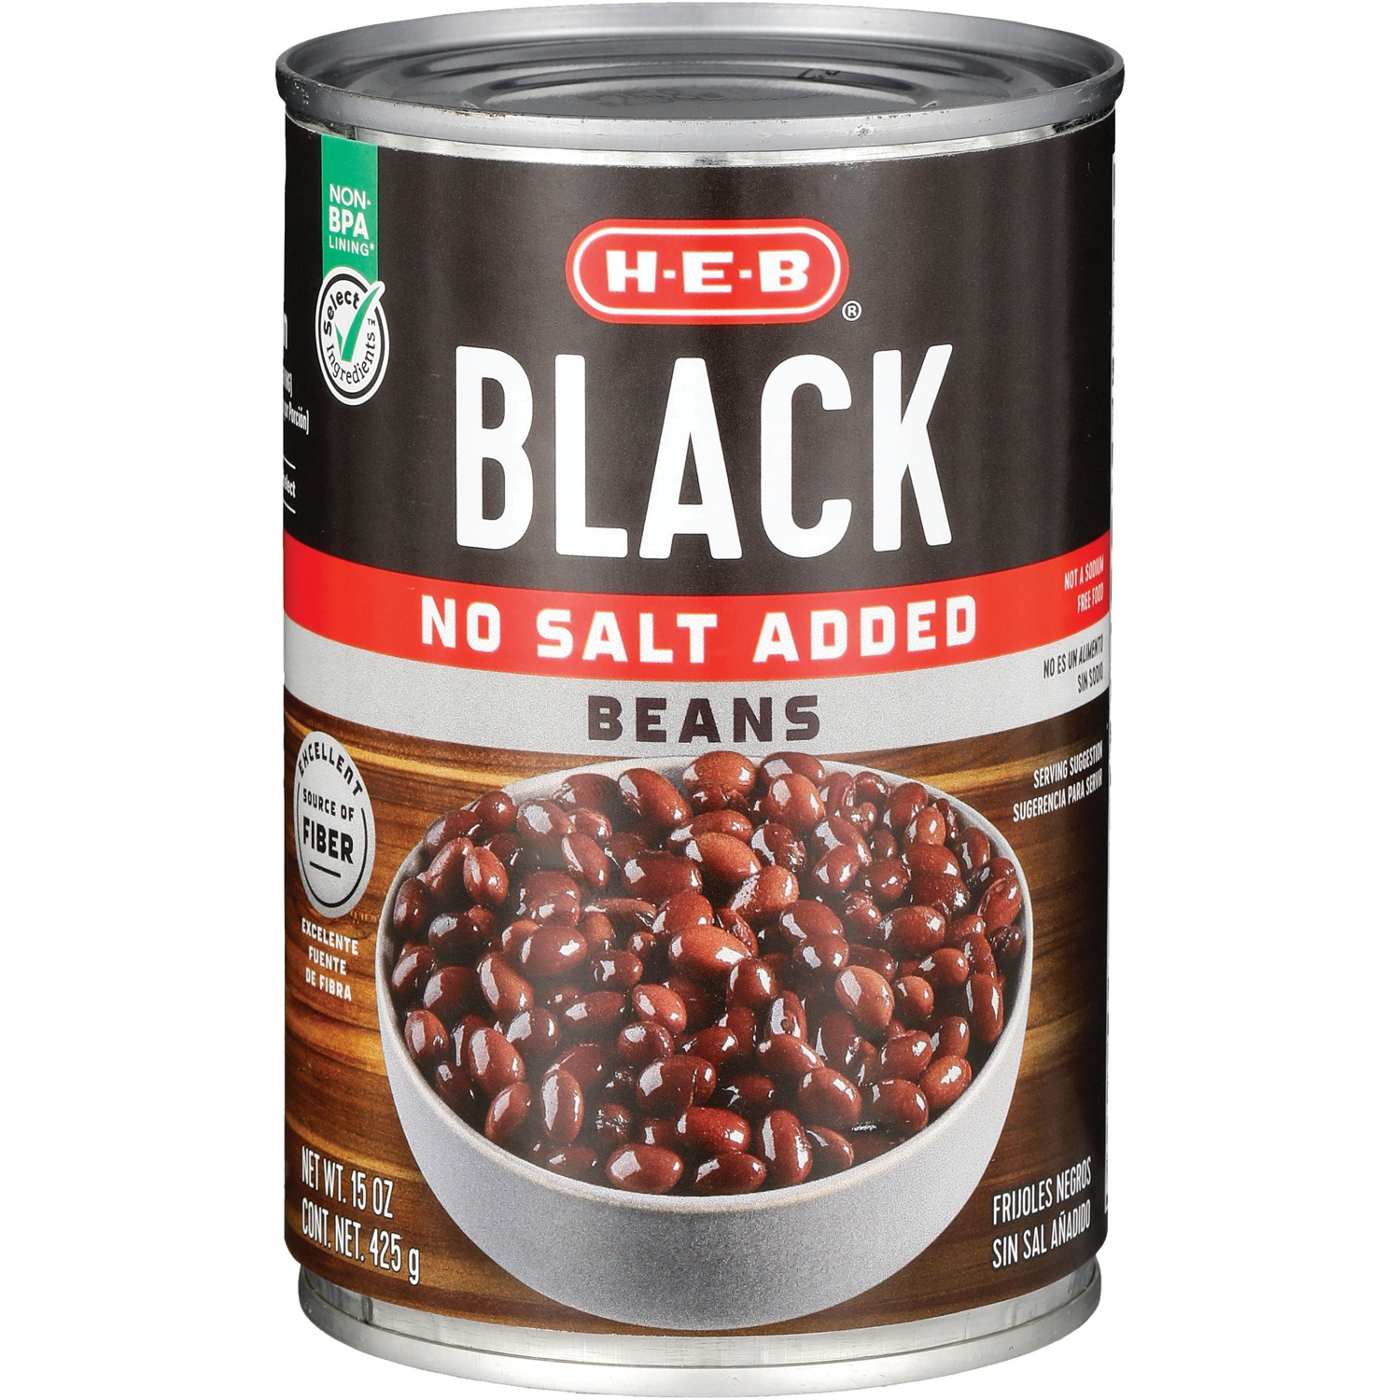 H-E-B No Salt Added Black Beans; image 2 of 2